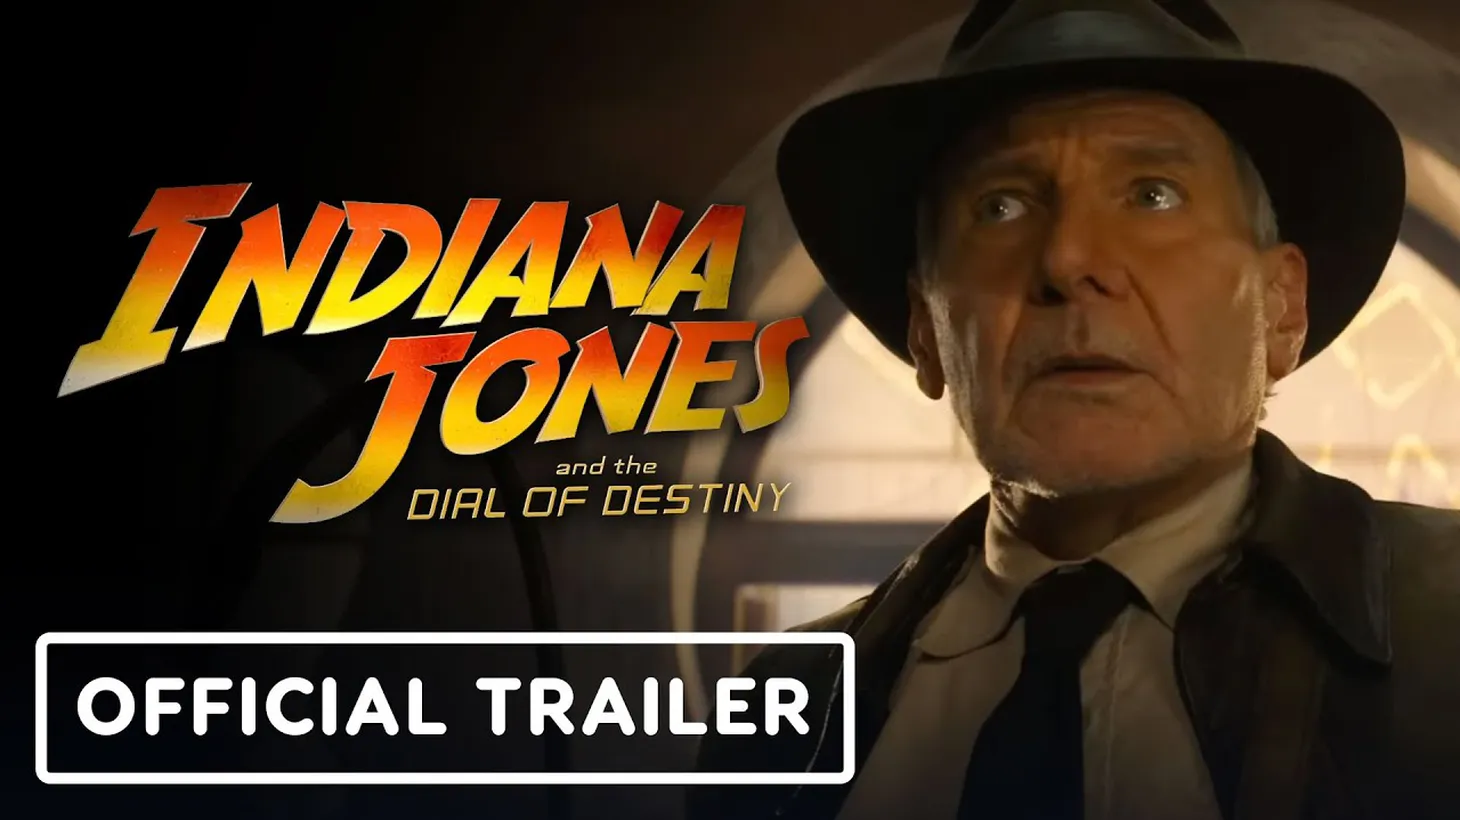 New 'Indiana Jones' Installment Gets Surprising Update - Inside the Magic